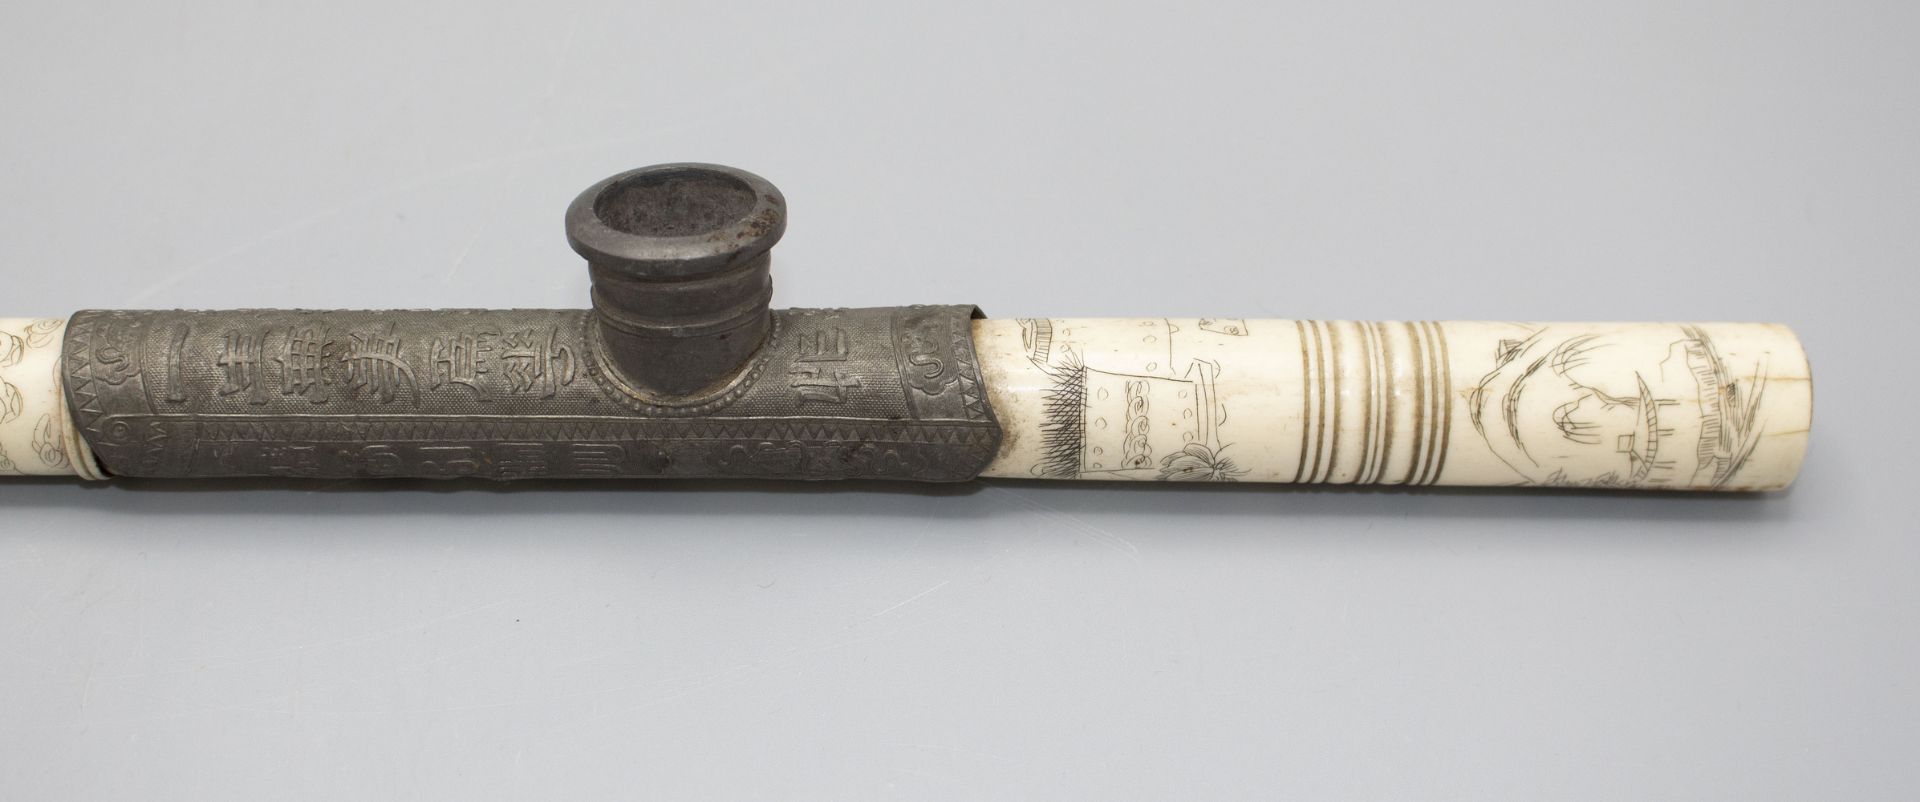 Opiumpfeife / An opium pipe, China, wohl 19. Jh. - Bild 3 aus 5